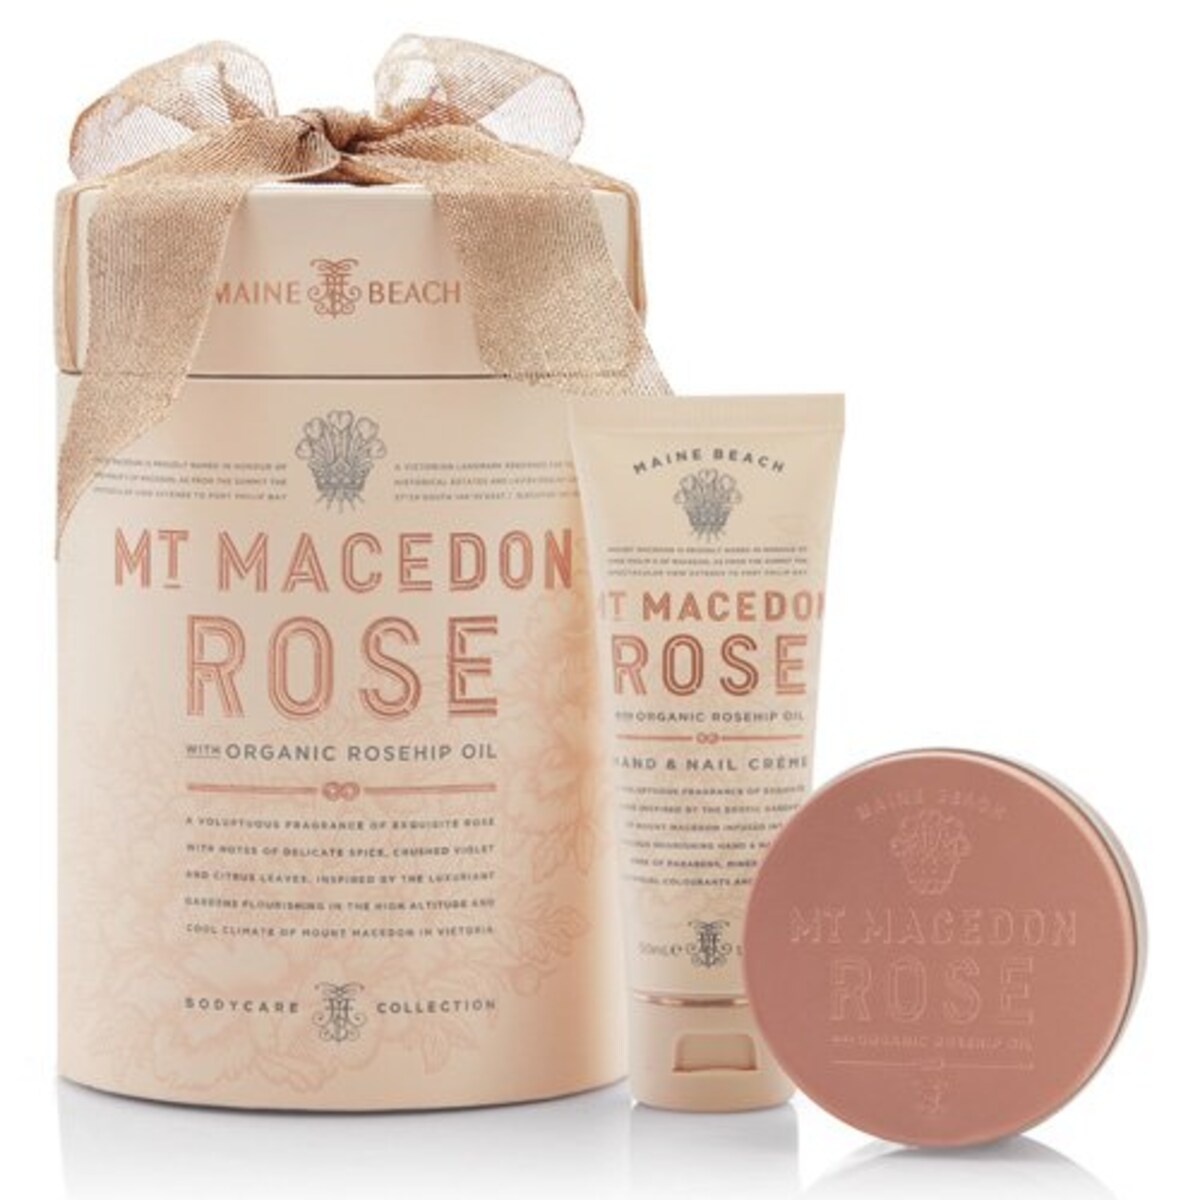 MT MACEDON ROSE Duo Gift Pack